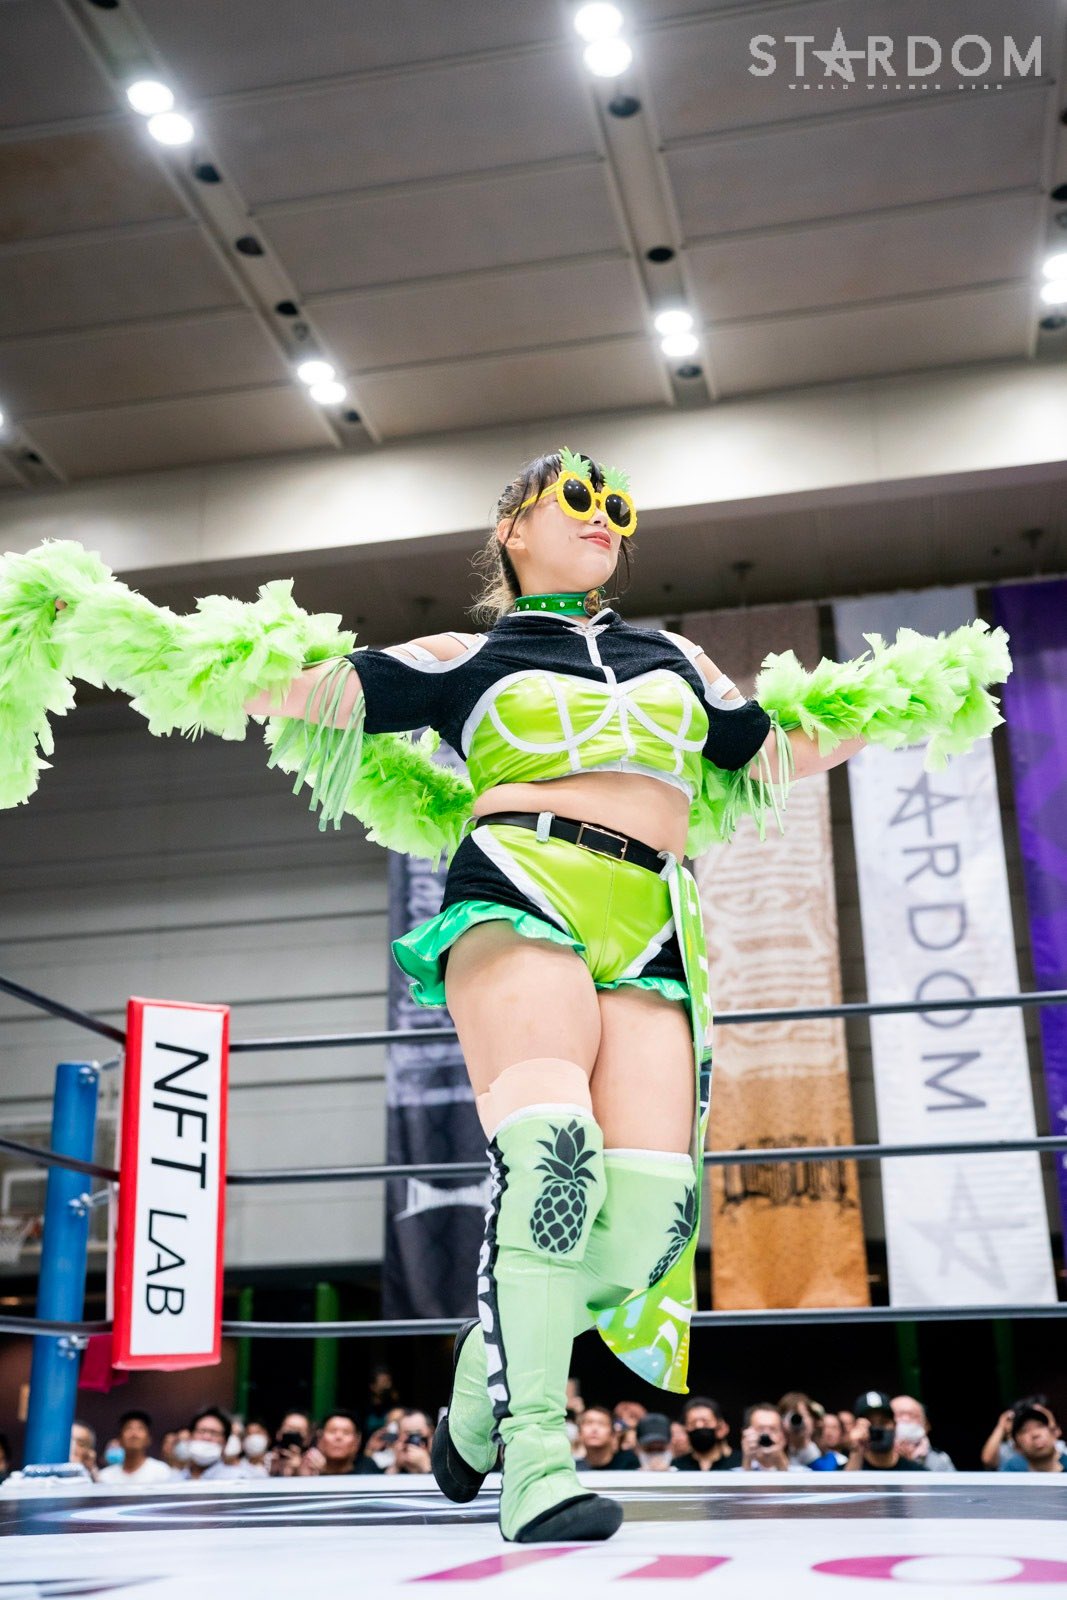 We Are Stardom on X: June 11 Osaka ◇Singles Match Hazuki defeated Yuna  Mizumori via submission. Part 1 t.coVYt6gKbDCt  X